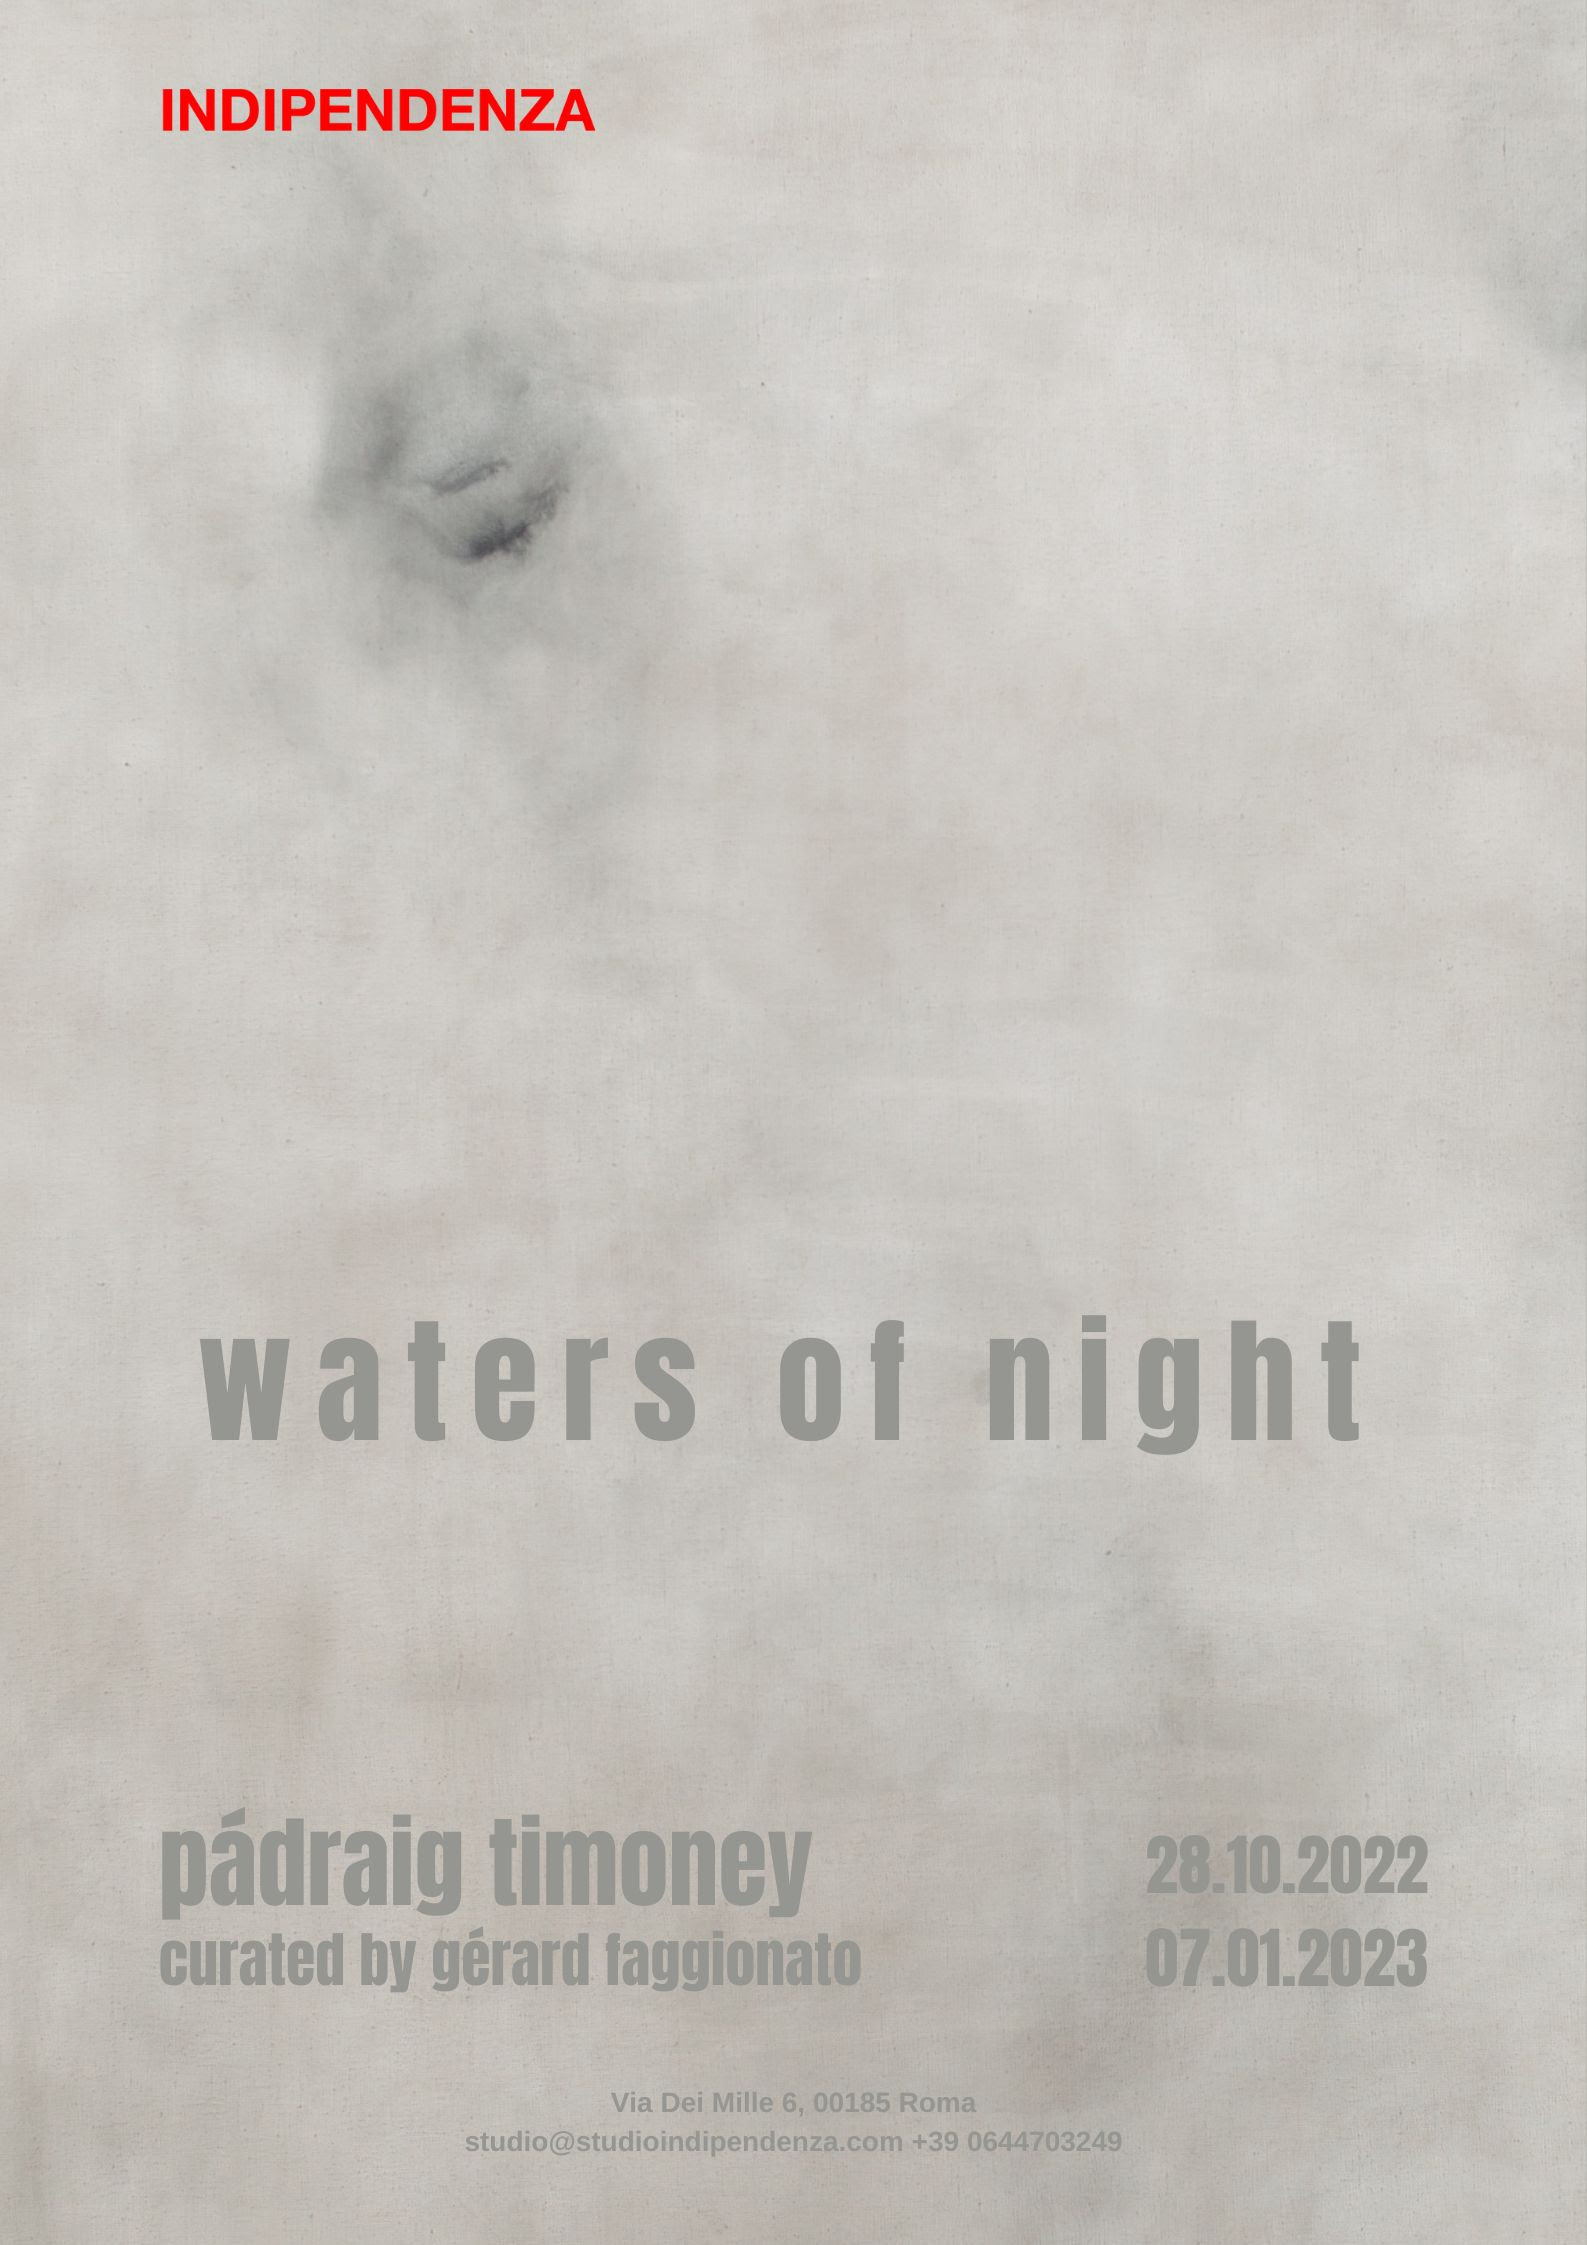 Pádraig Timoney - Waters of night